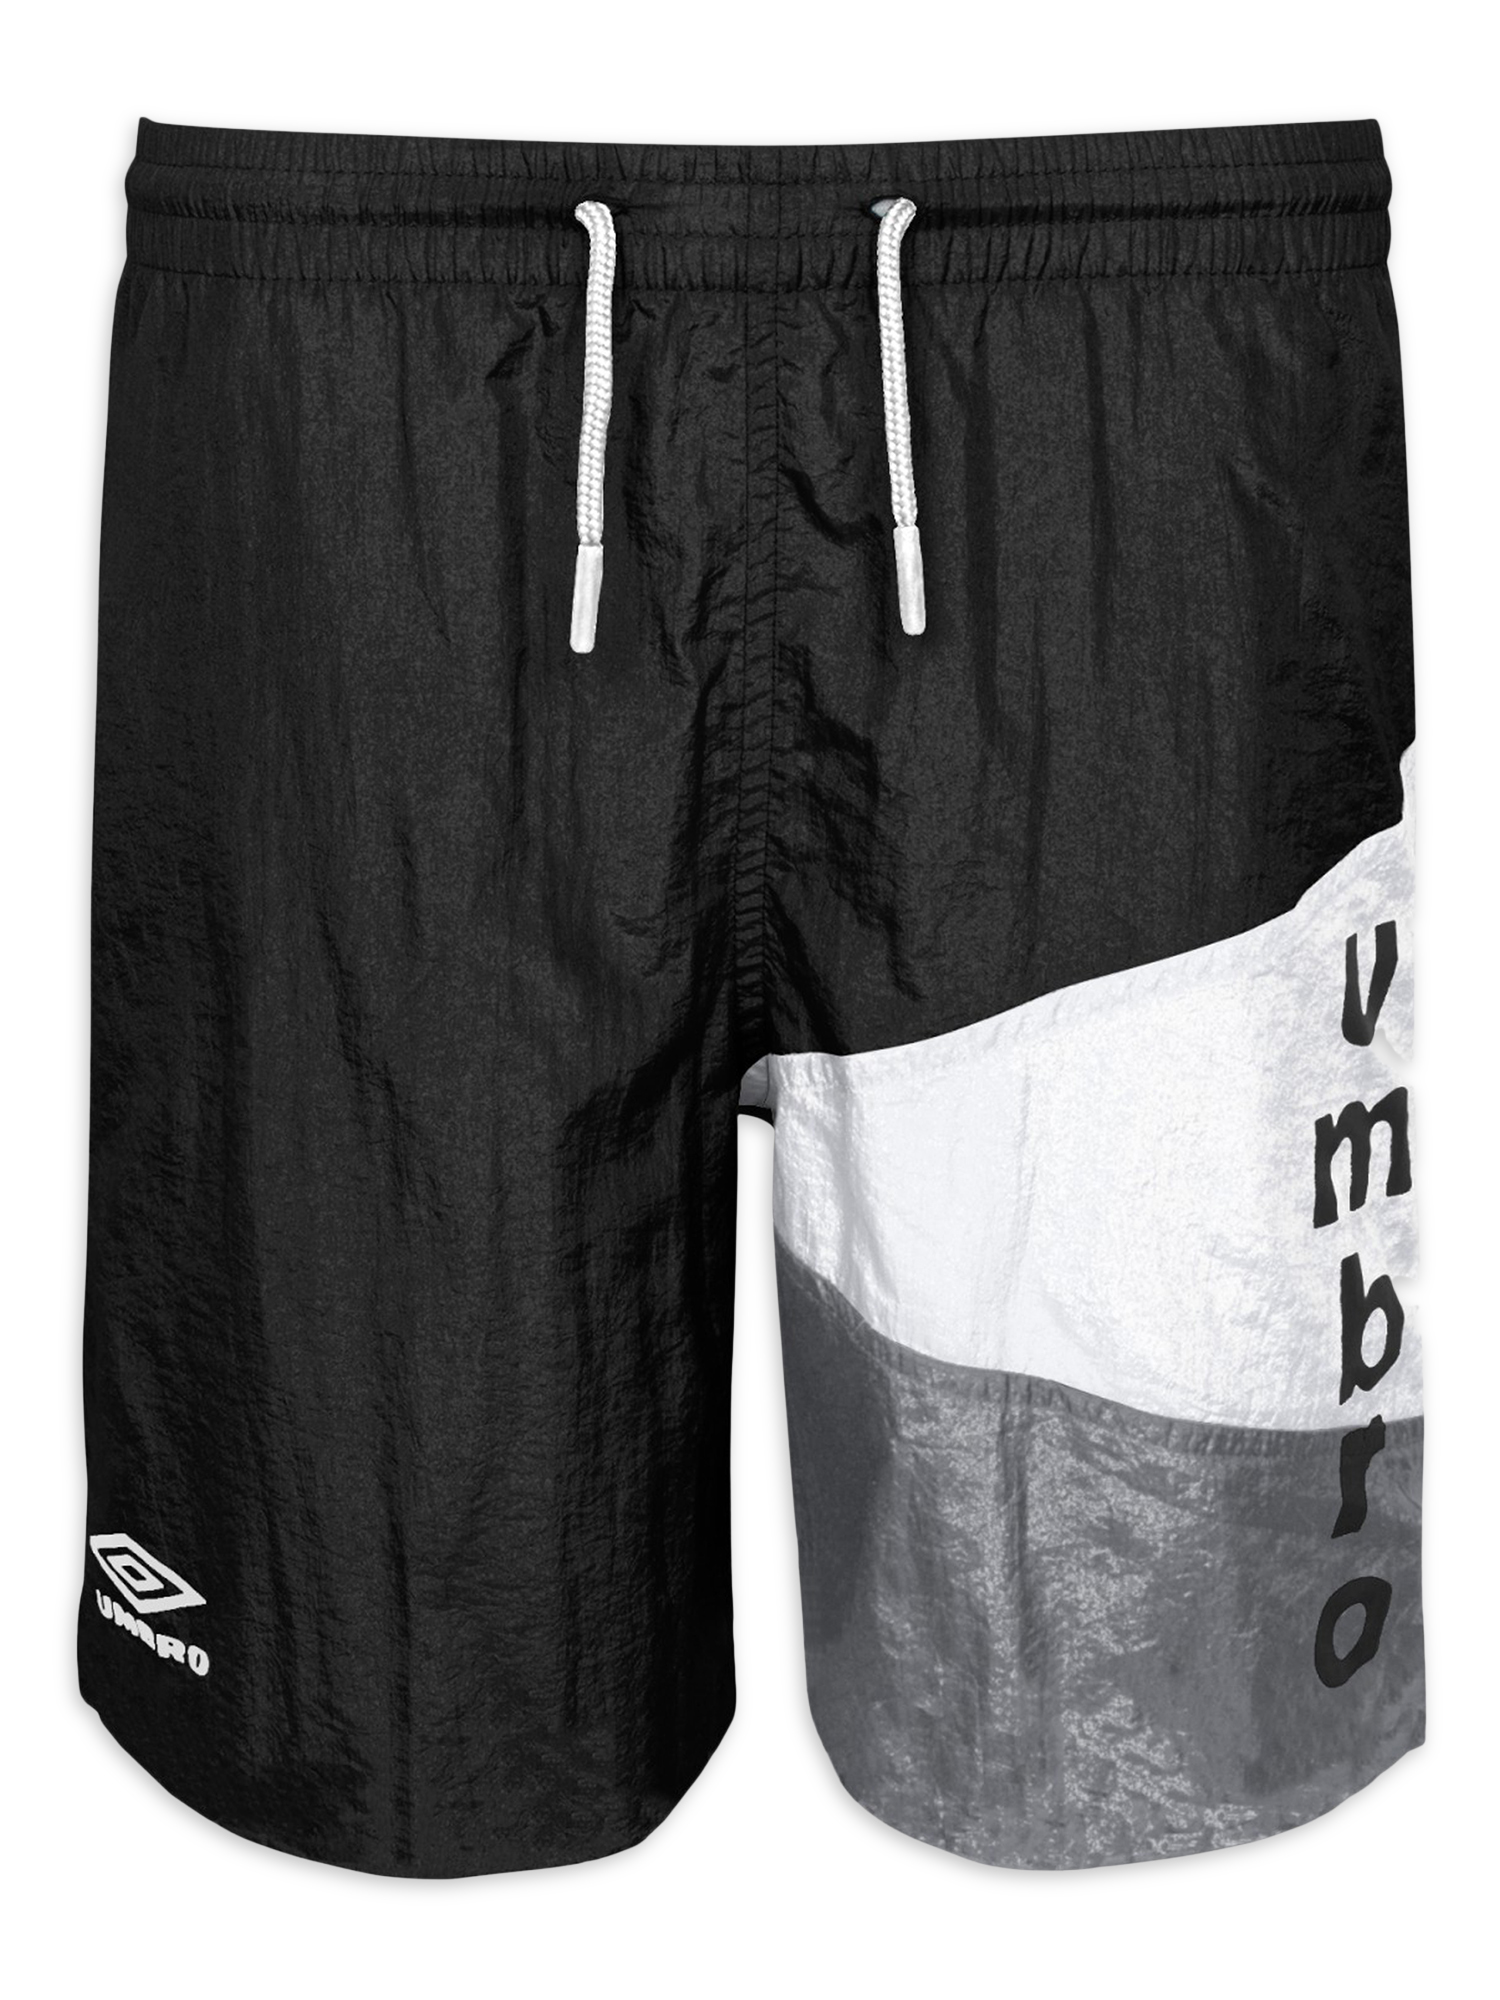 Umbro Boys Retro Diamond Soccer Jerseys and Shorts 4-Piece Outfit Set, Sizes 4-18 - image 2 of 9